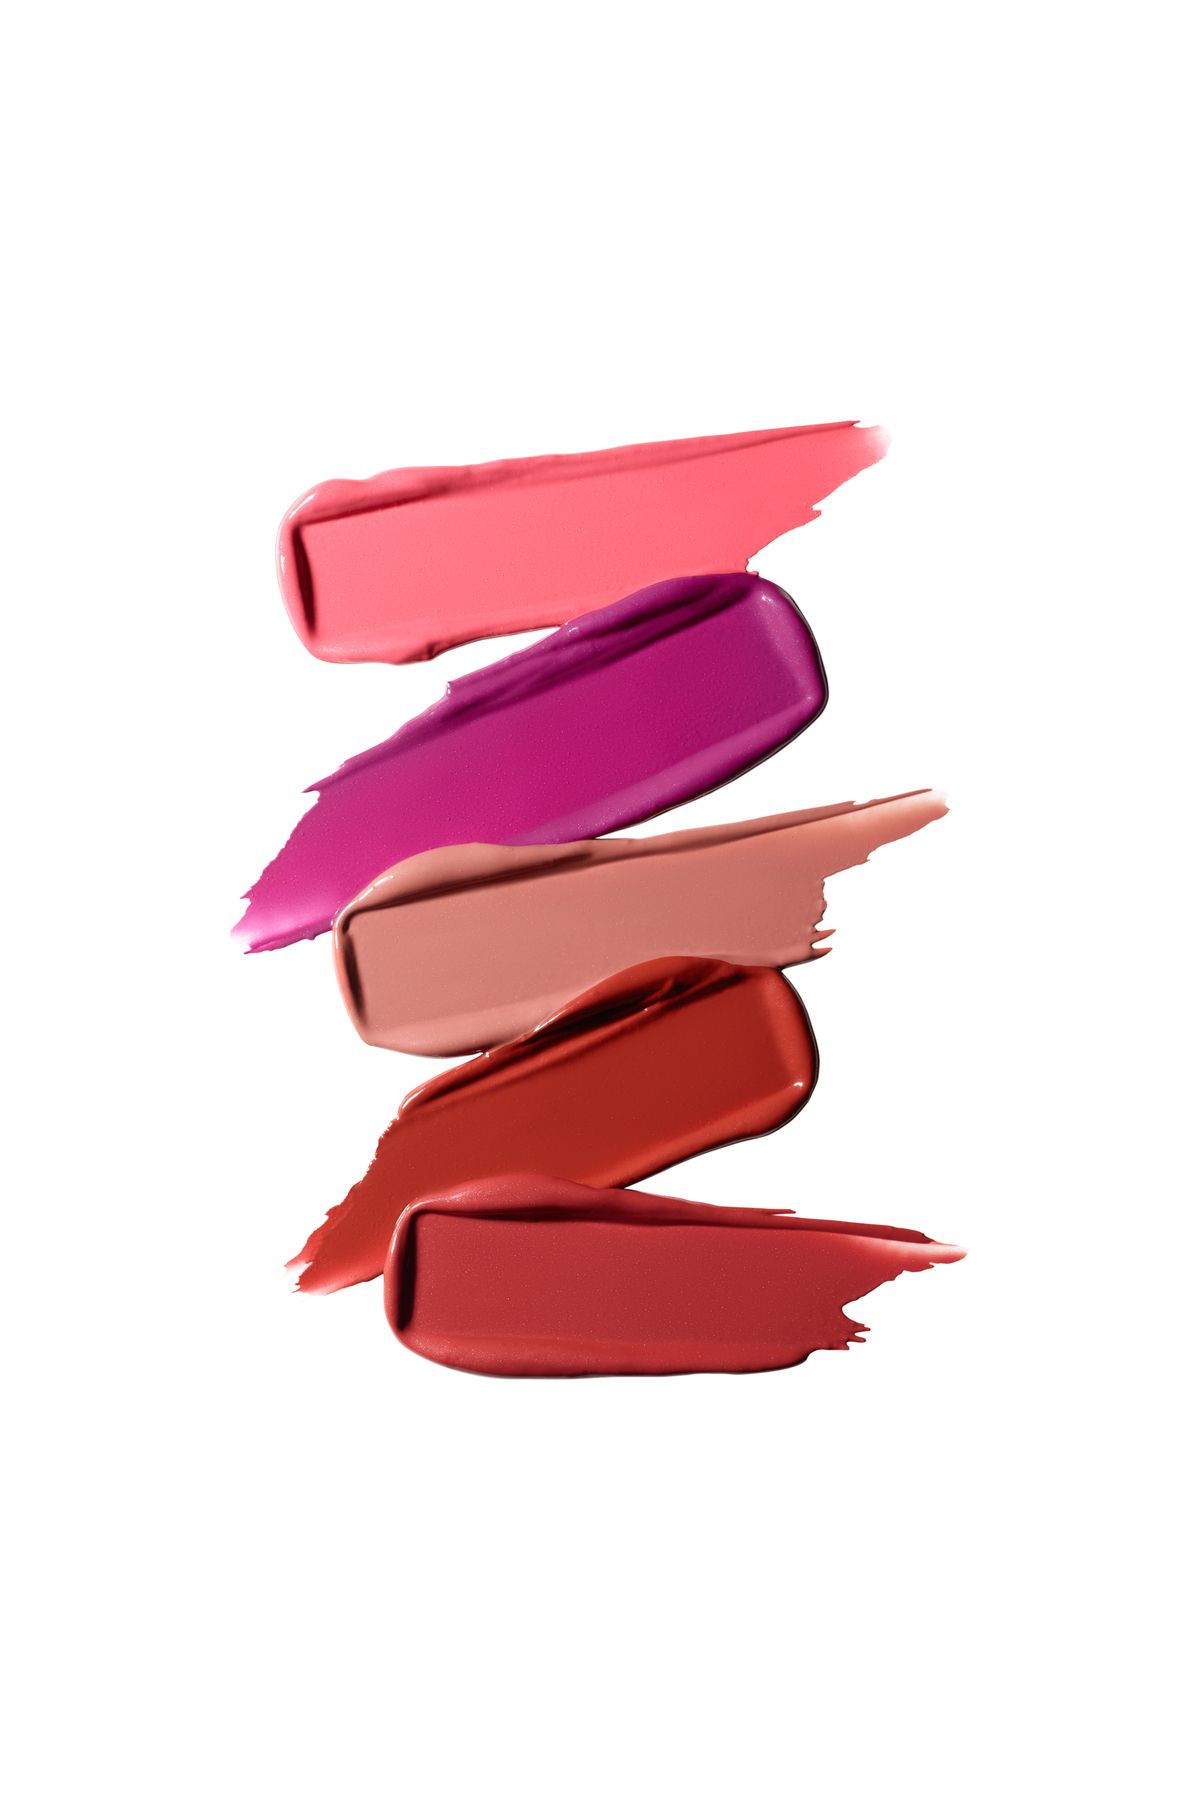 Mac مجموعه لوازم آرایشی 5 رژلب براق Frostbıtten Kiss رنگ‌های تازه